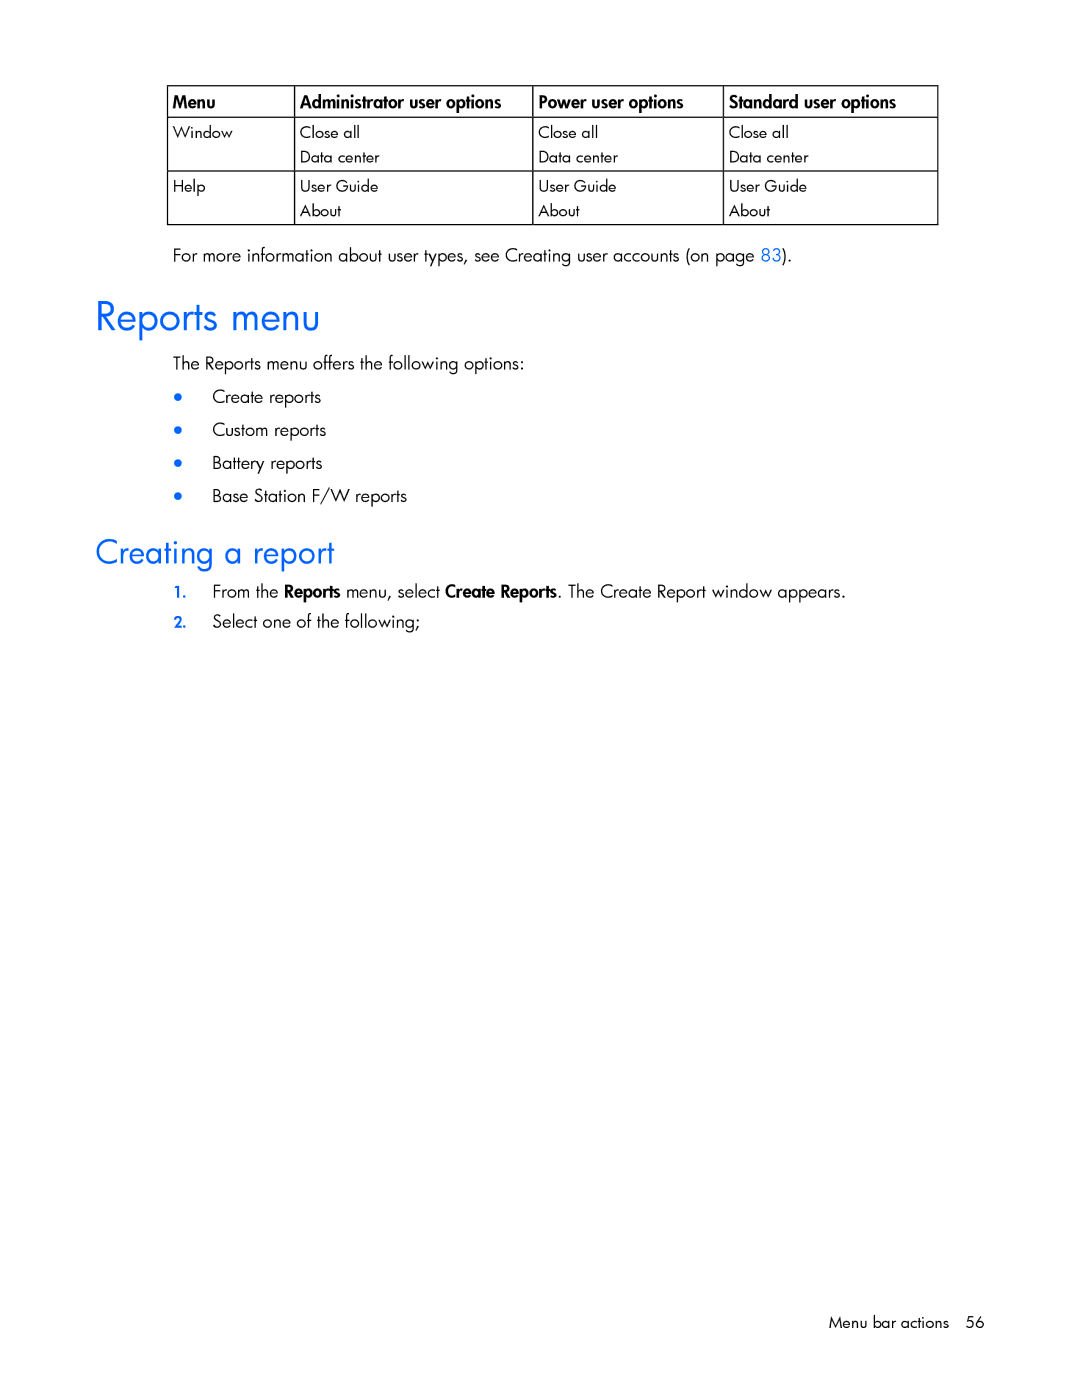 HP Data Center EnvIronmental Edge manual Reports menu, Creating a report 